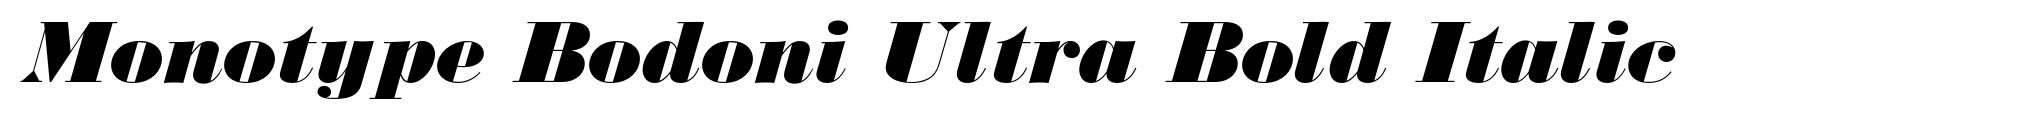 Monotype Bodoni Ultra Bold Italic image